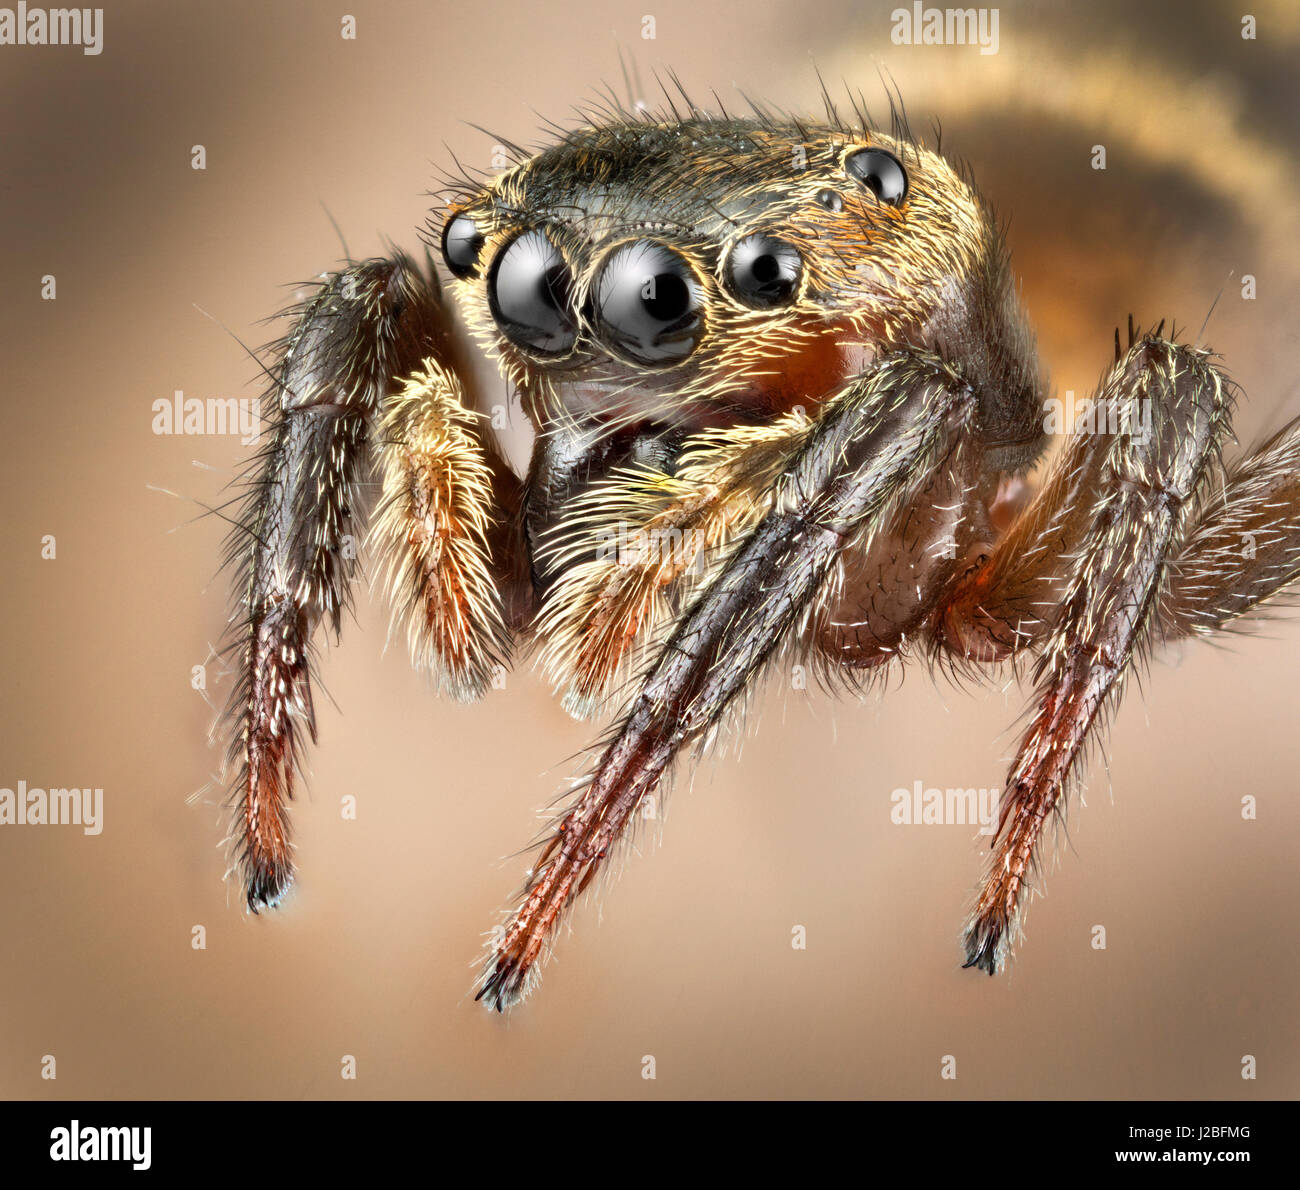 Malaysia jumping spider, Salticidae, Plexippus sp, high macro 'stacked' image Stock Photo